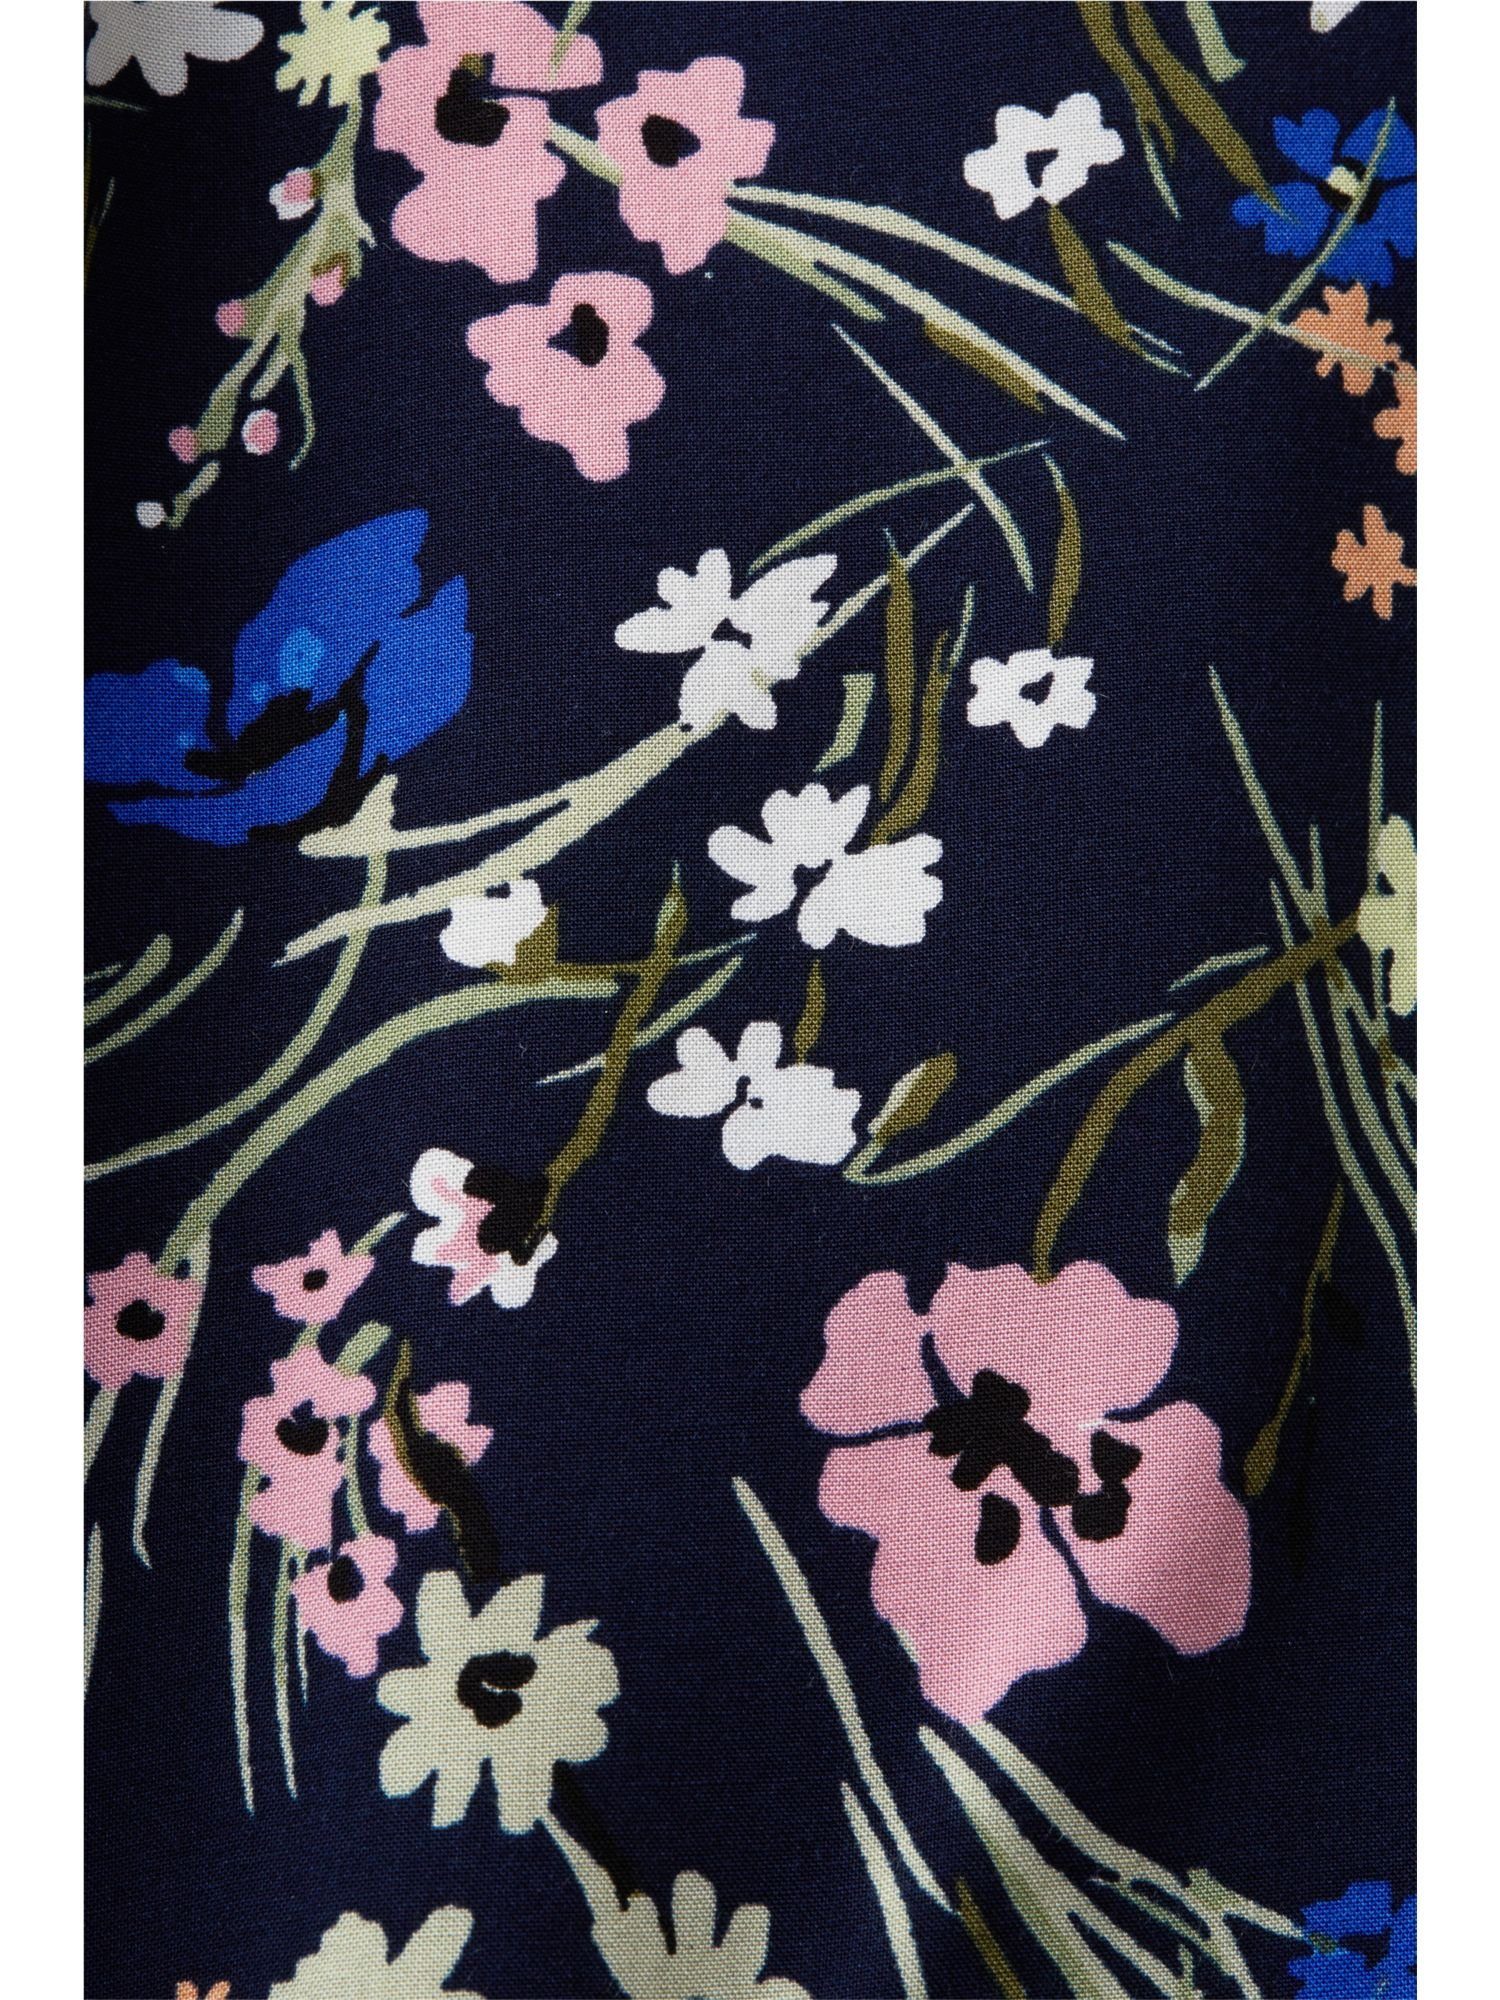 geschlitztem Bluse Esprit NAVY Ausschnitt Kurzarmbluse mit Florale